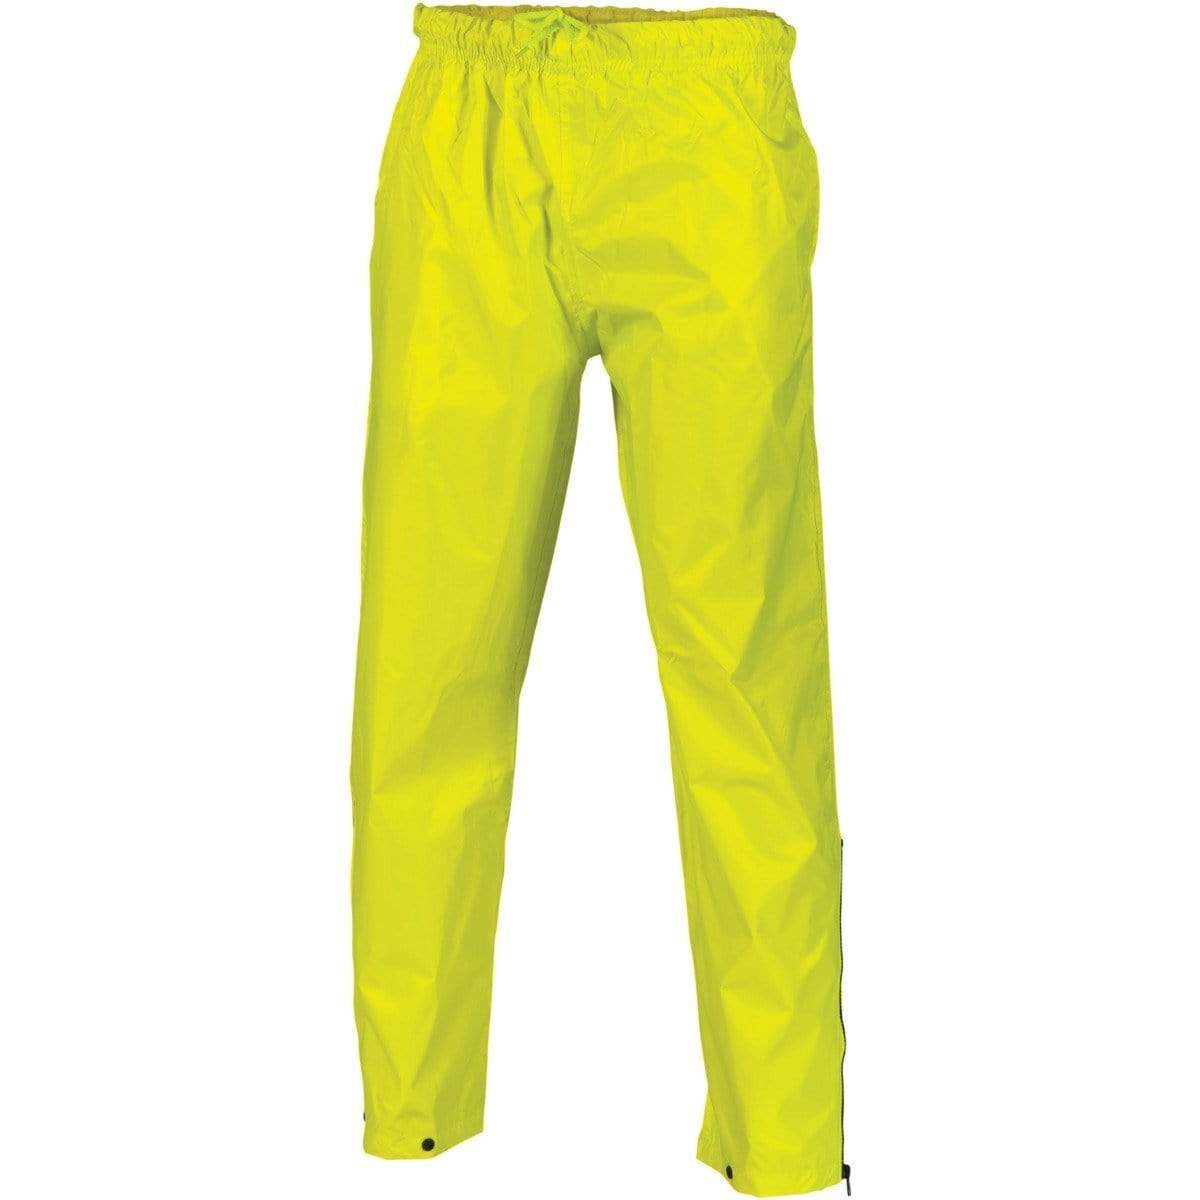 Dnc Workwear Classic Rain Pants - 3707 Work Wear DNC Workwear Yellow S 